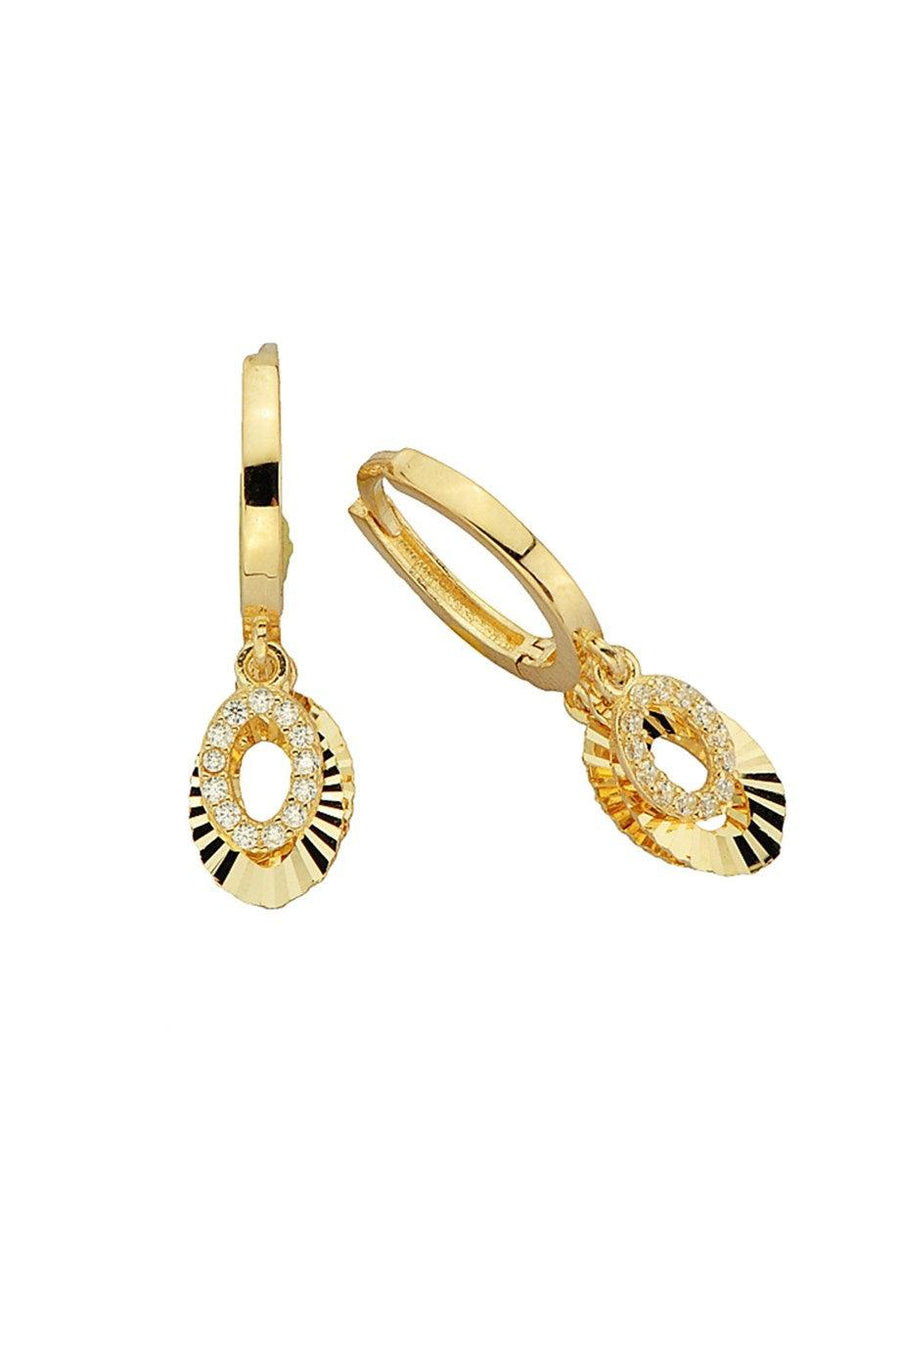 Gold Oval Figure Ring Earrings